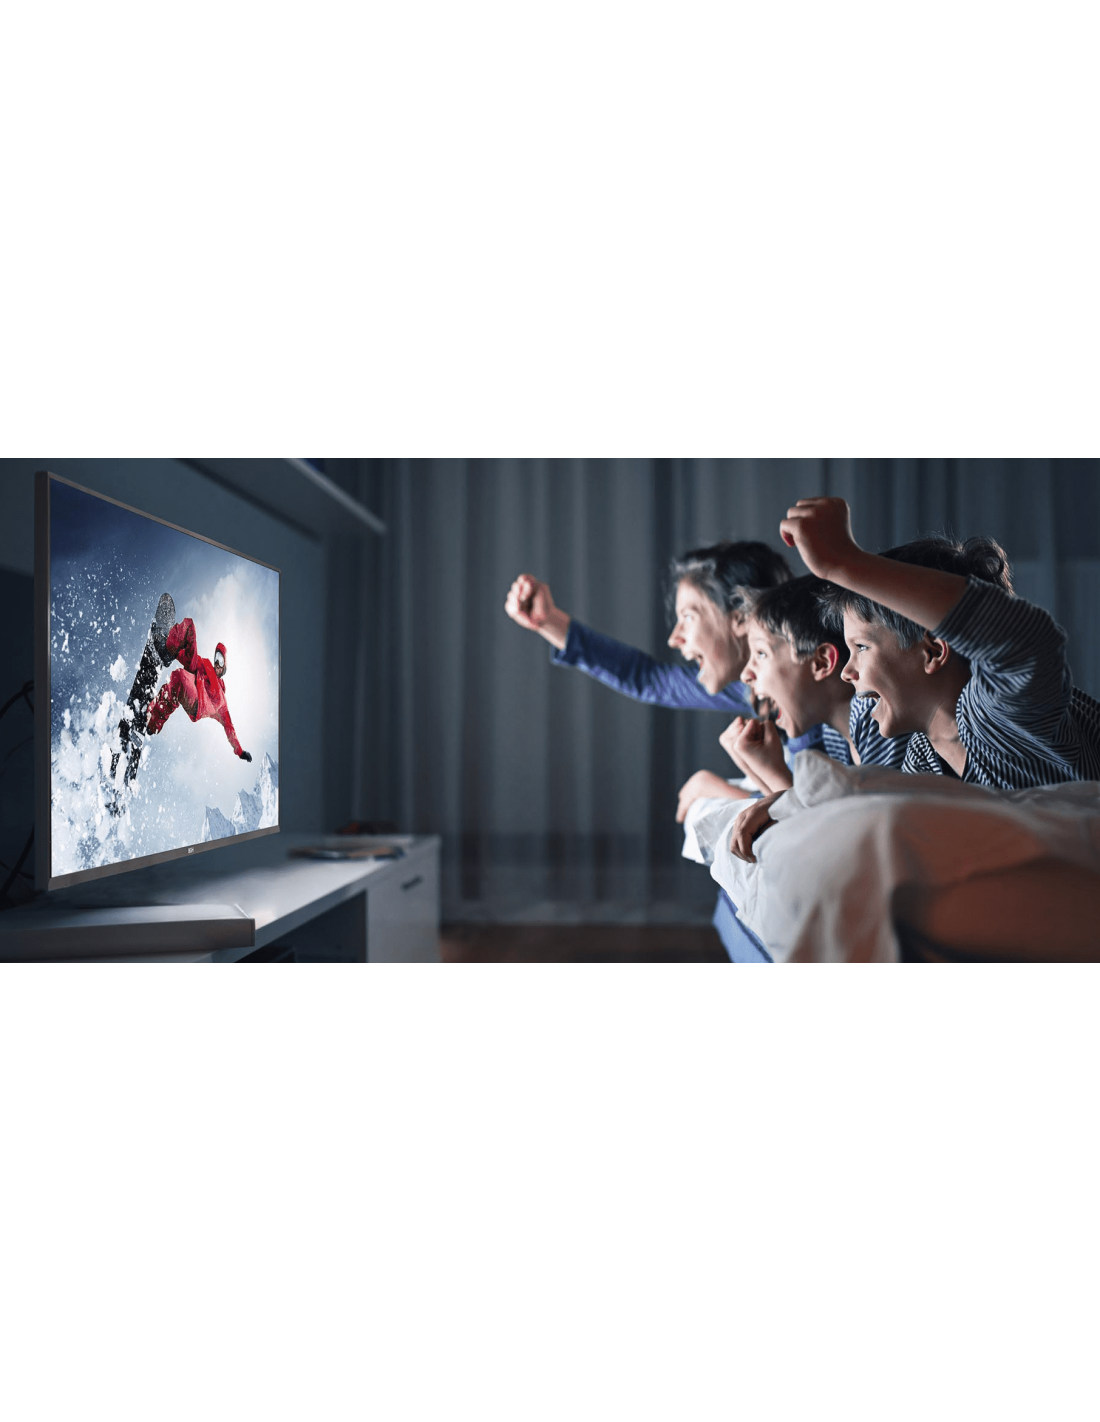 Smart TV 4K Ultra HD 50 BGH B5018UH6